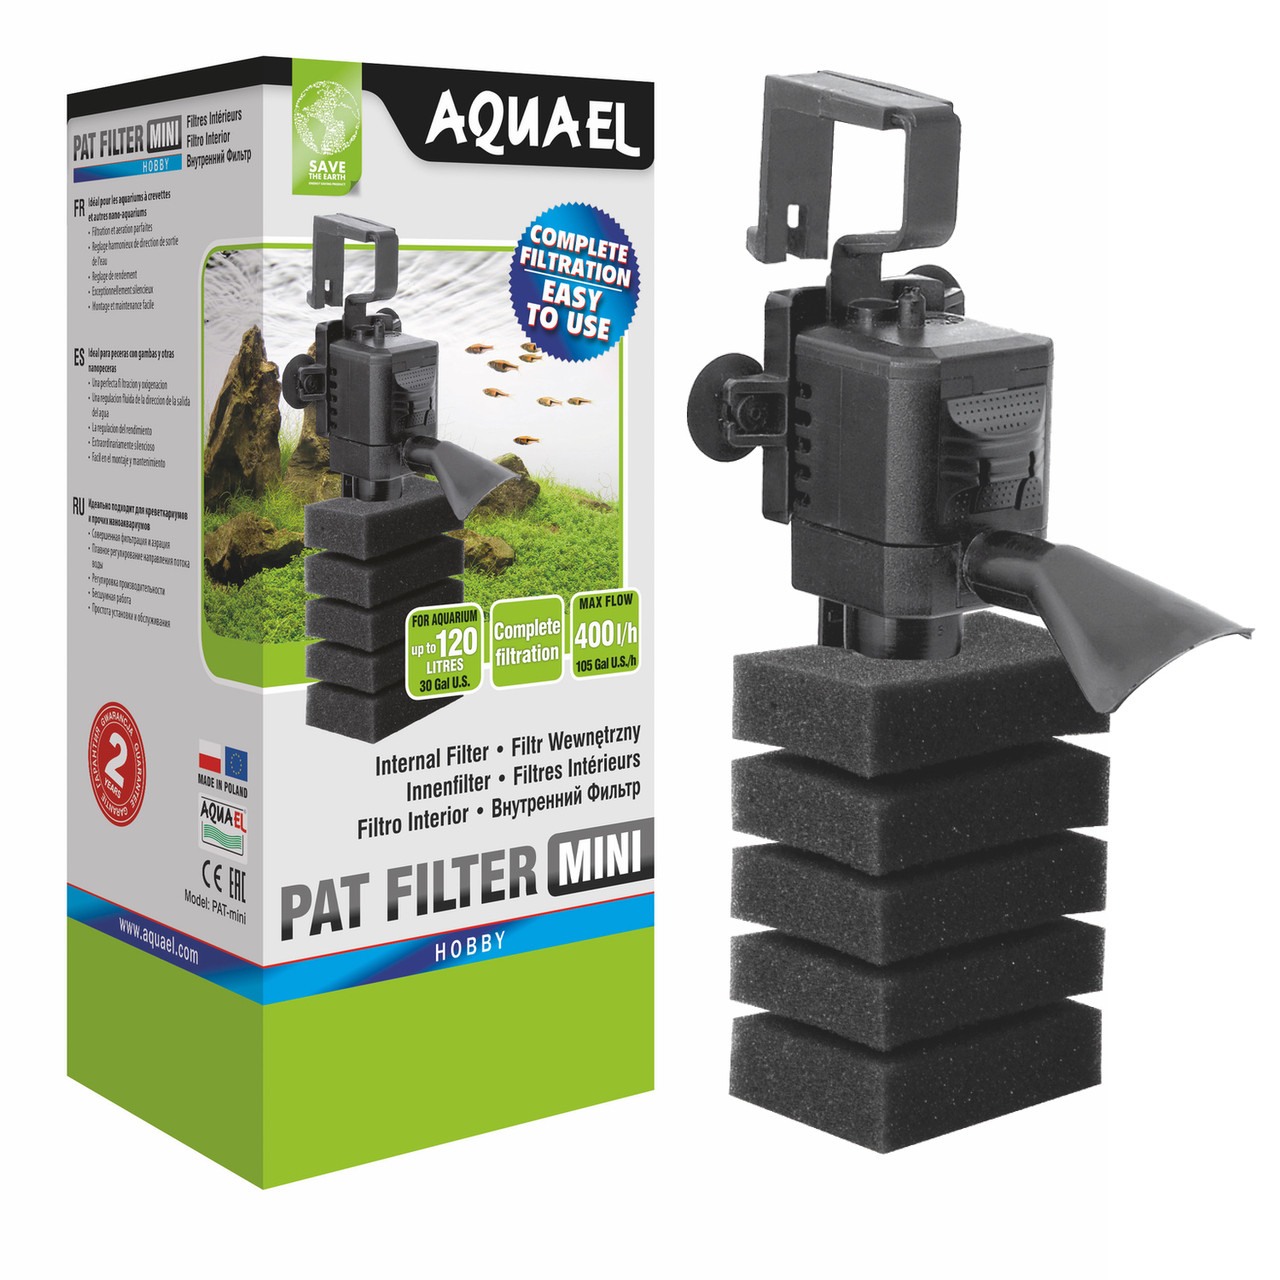 Aquael Pat Mini Filter with Power & Flow Control (5 to 30 Gal)